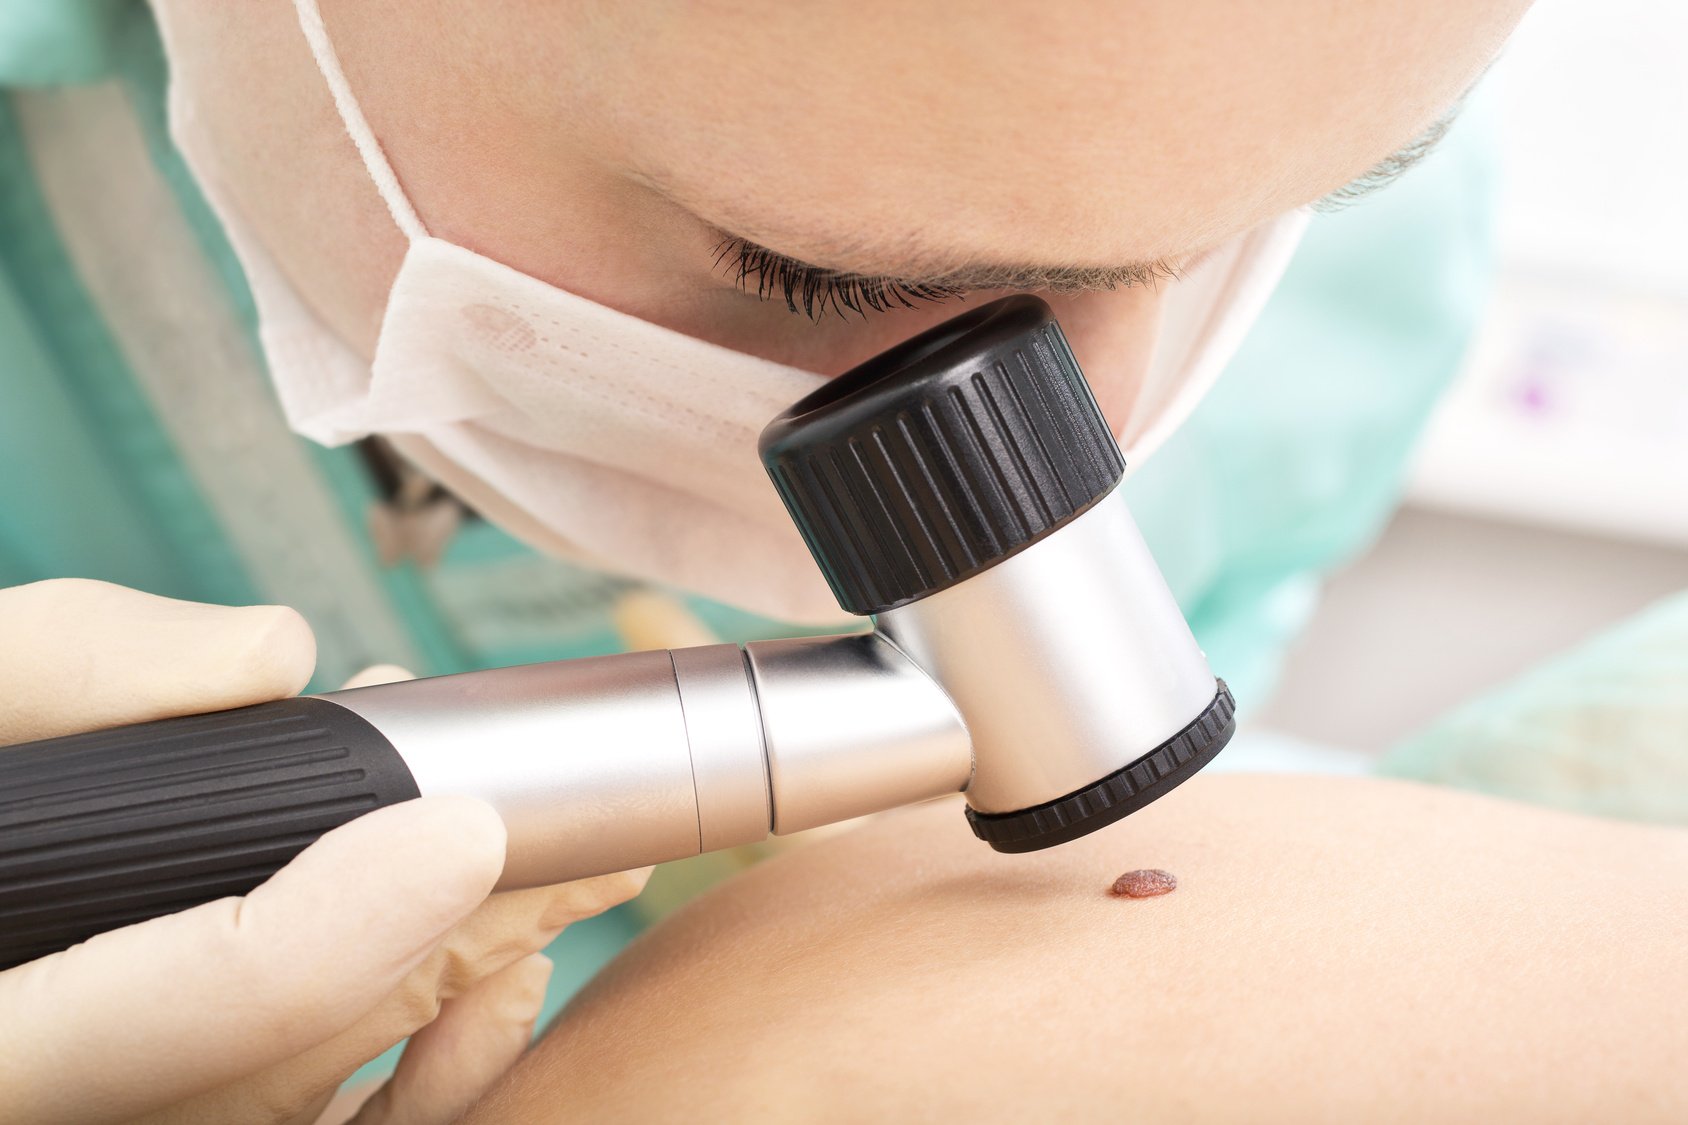 examines birthmark with dermatoscope